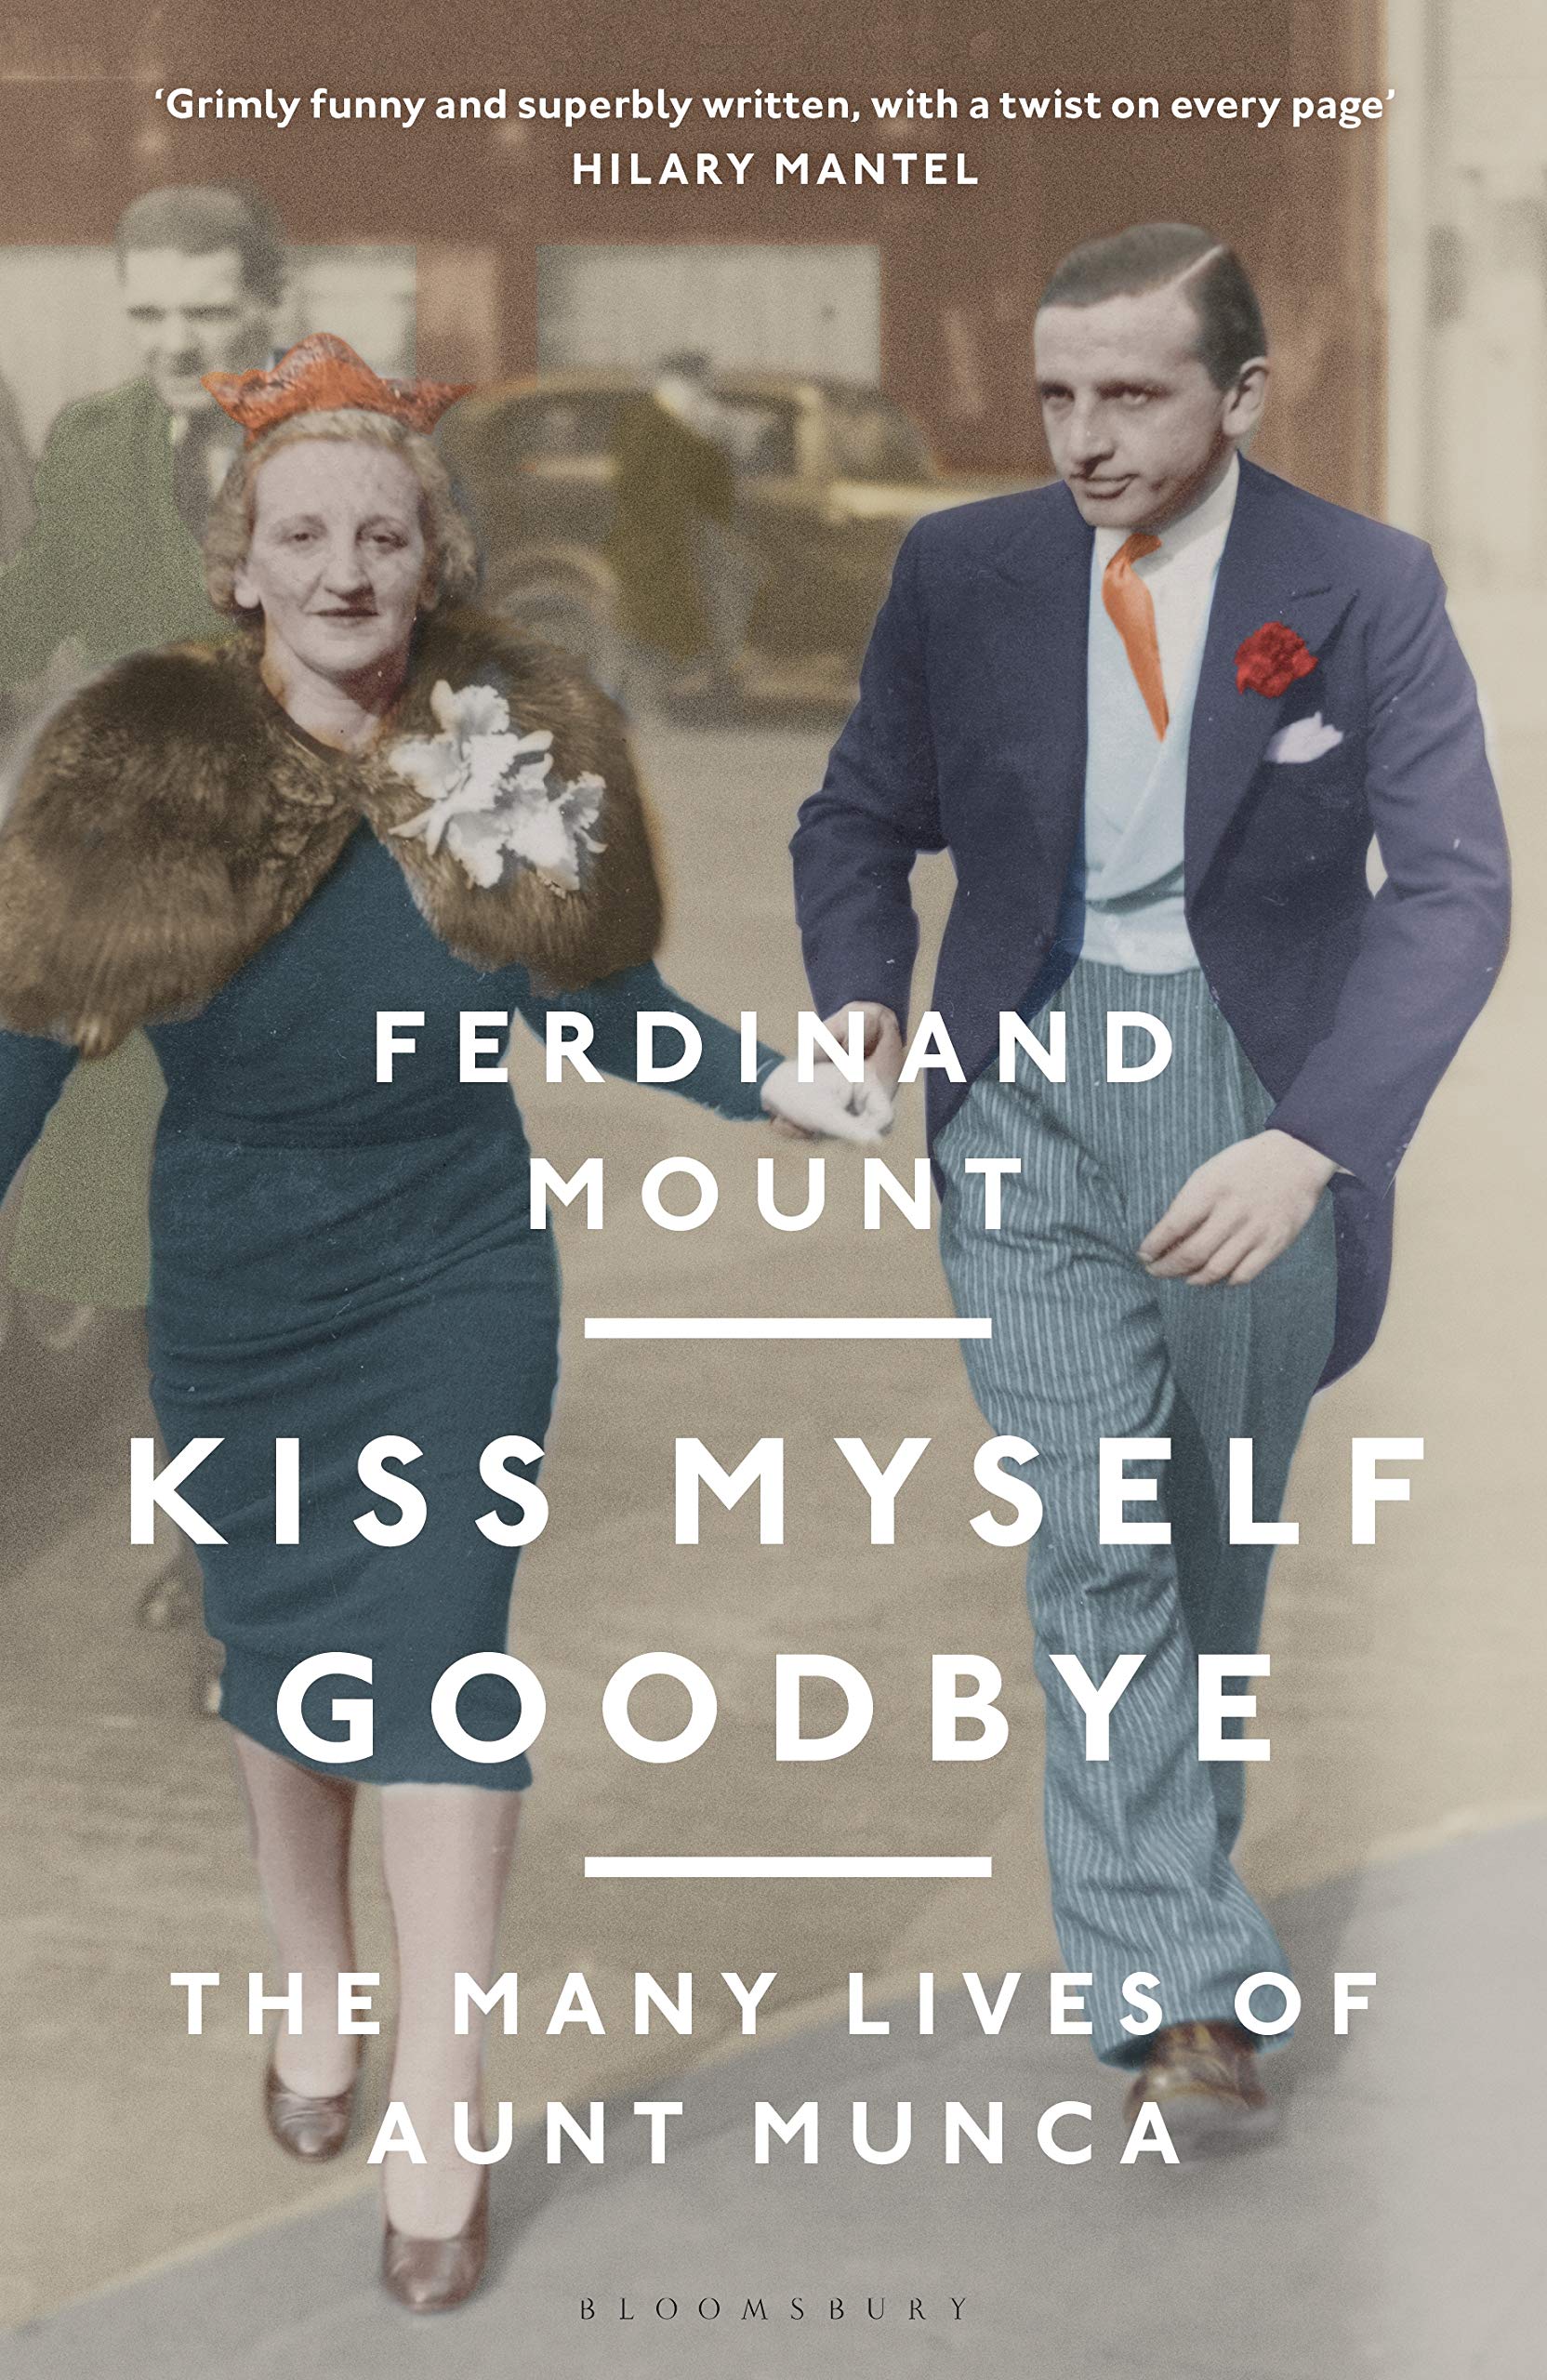 Kiss Myself Goodbye: The Many Lives of Aunt Munca - Ferdinand Mount